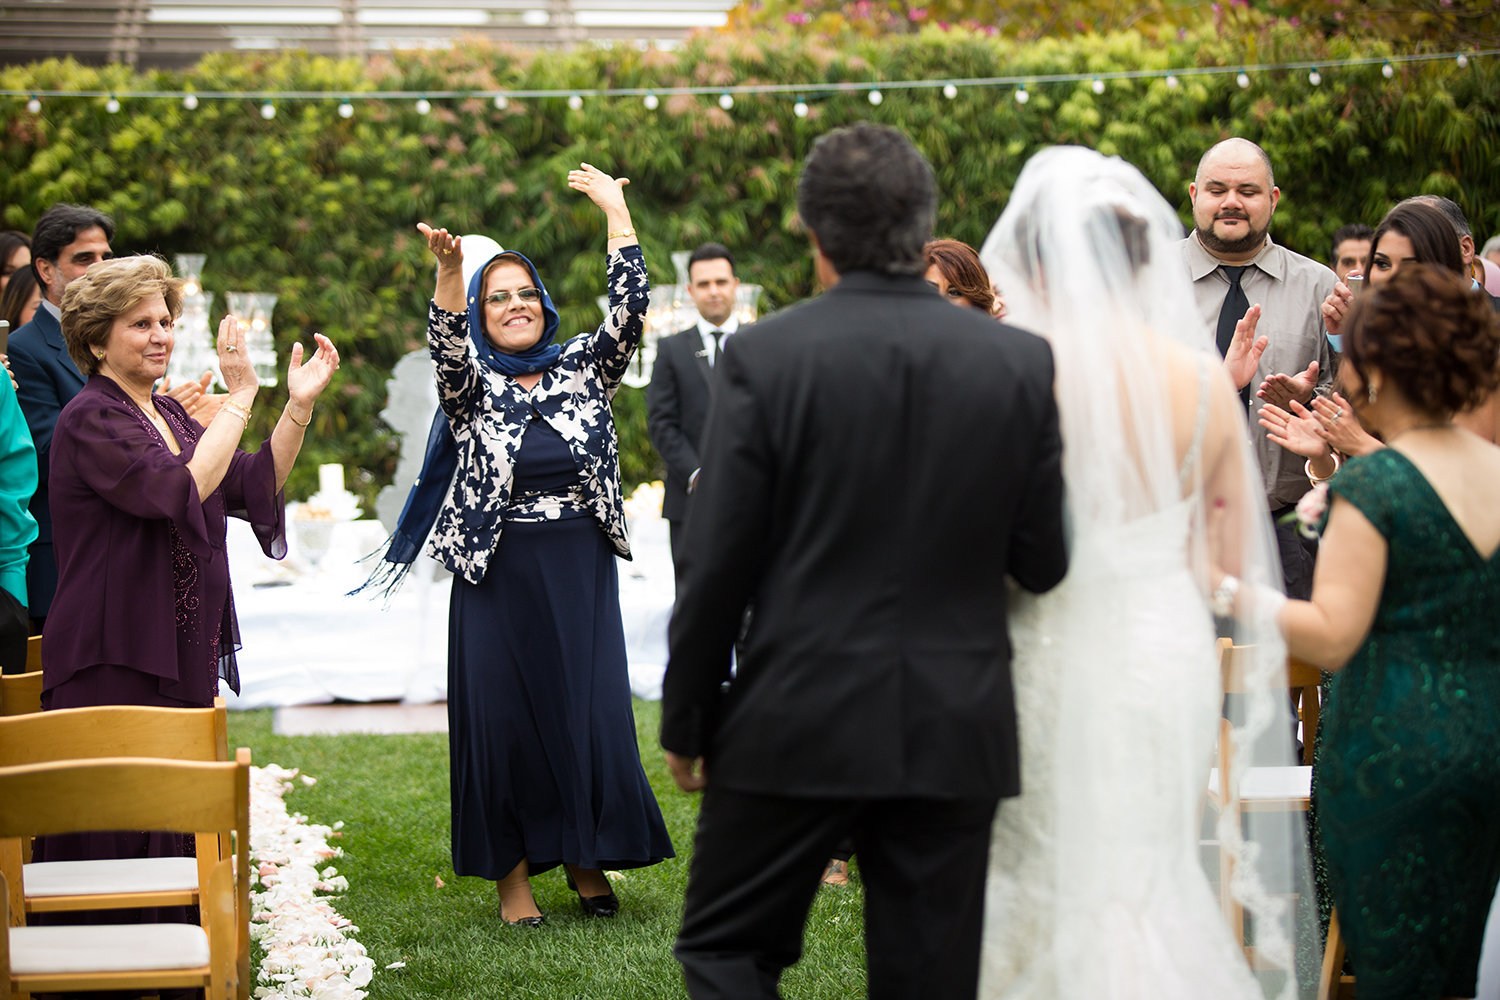 The beginning of a Persian wedding celebration